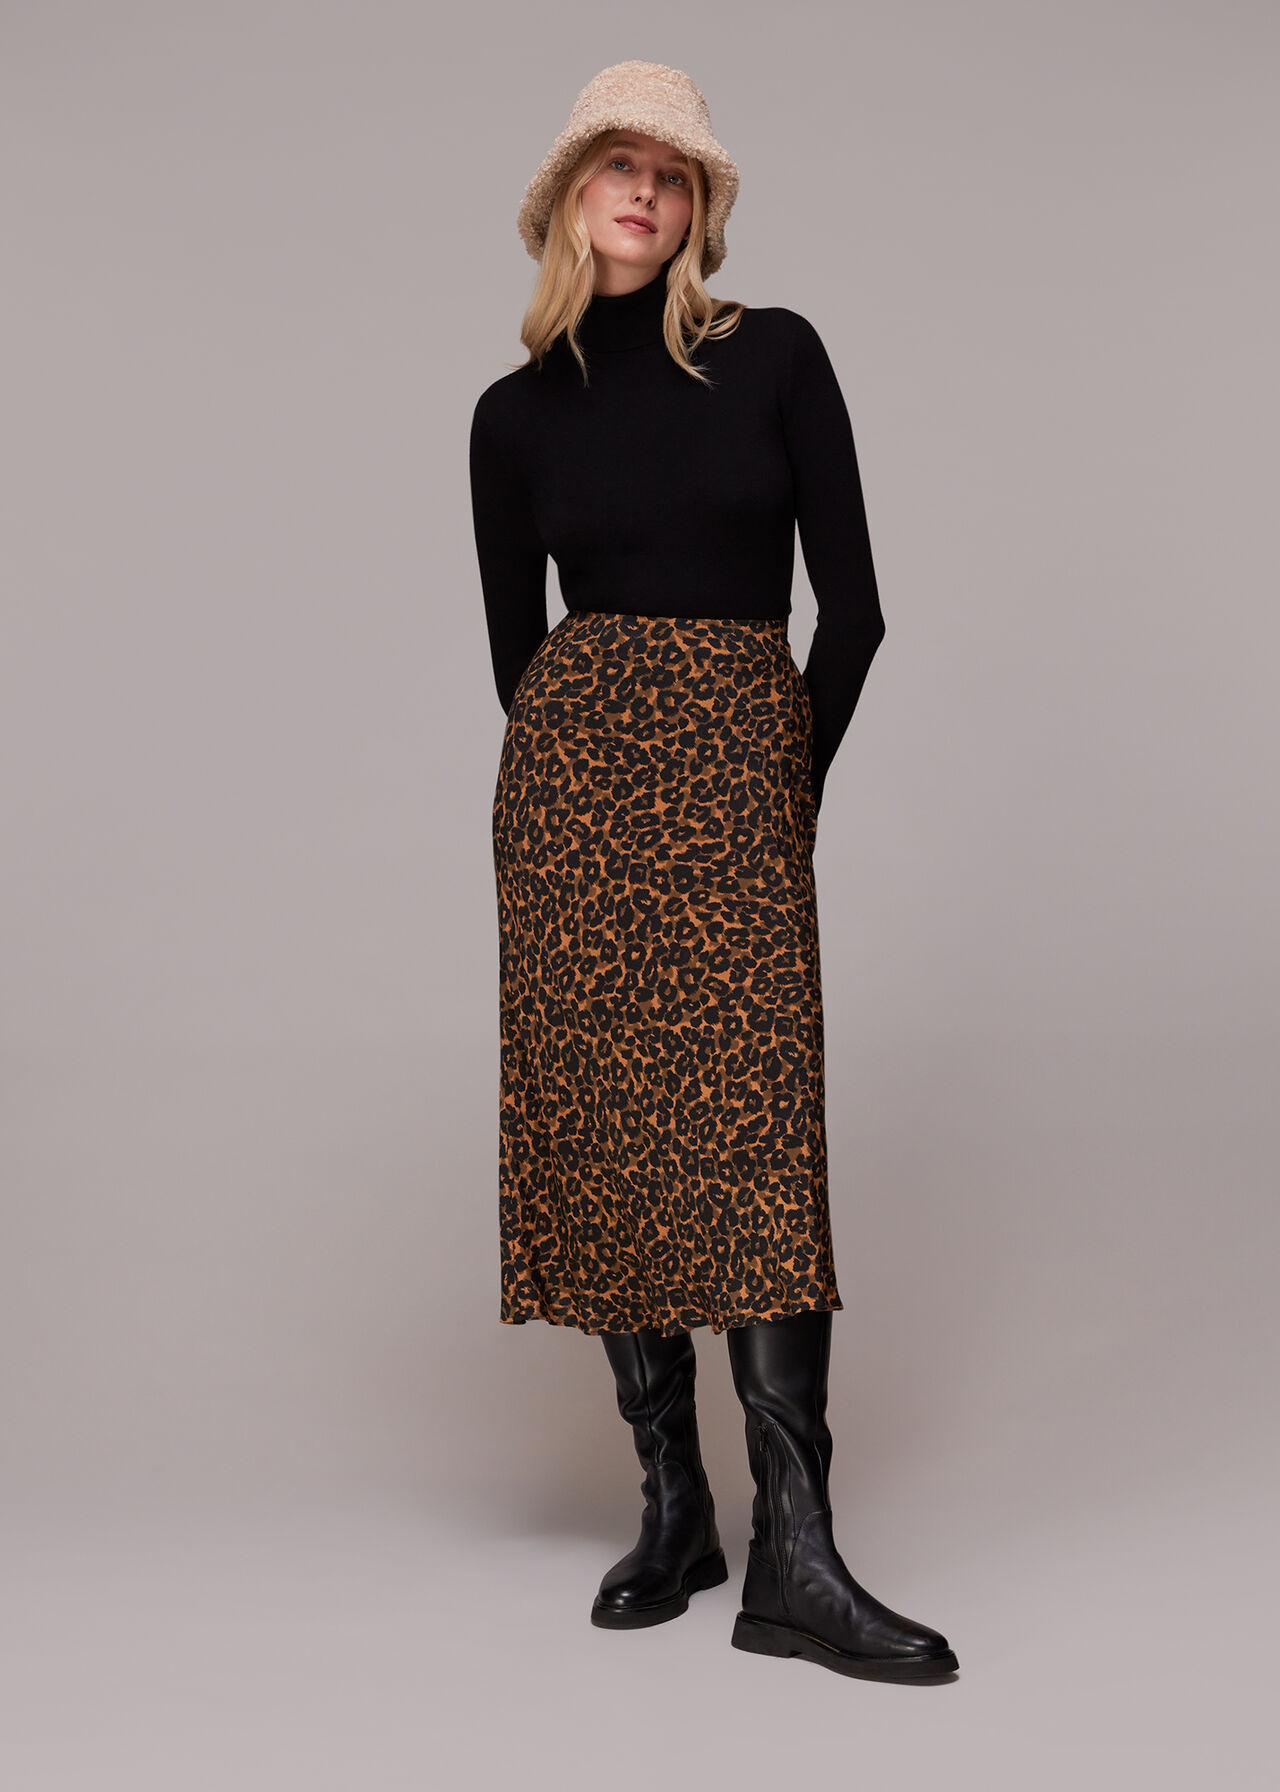 Classic Leopard Bias Cut Skirt